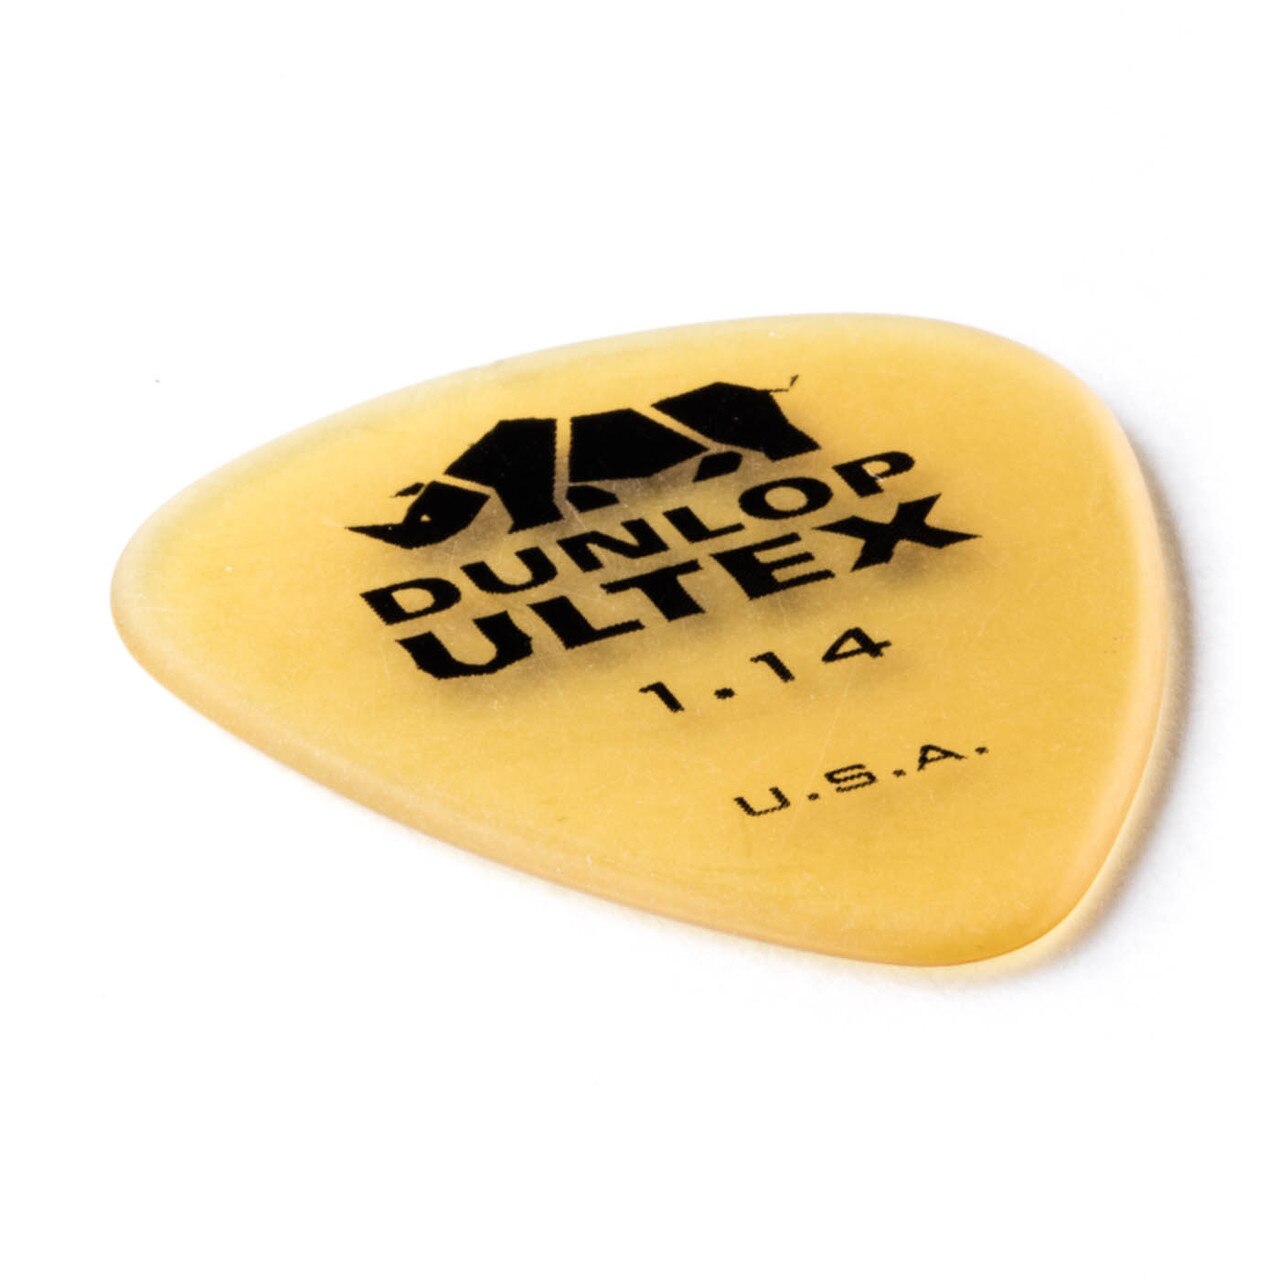 Jim Dunlop Ultex Standard 421 1.14mm - Guitar pick - Variation 1